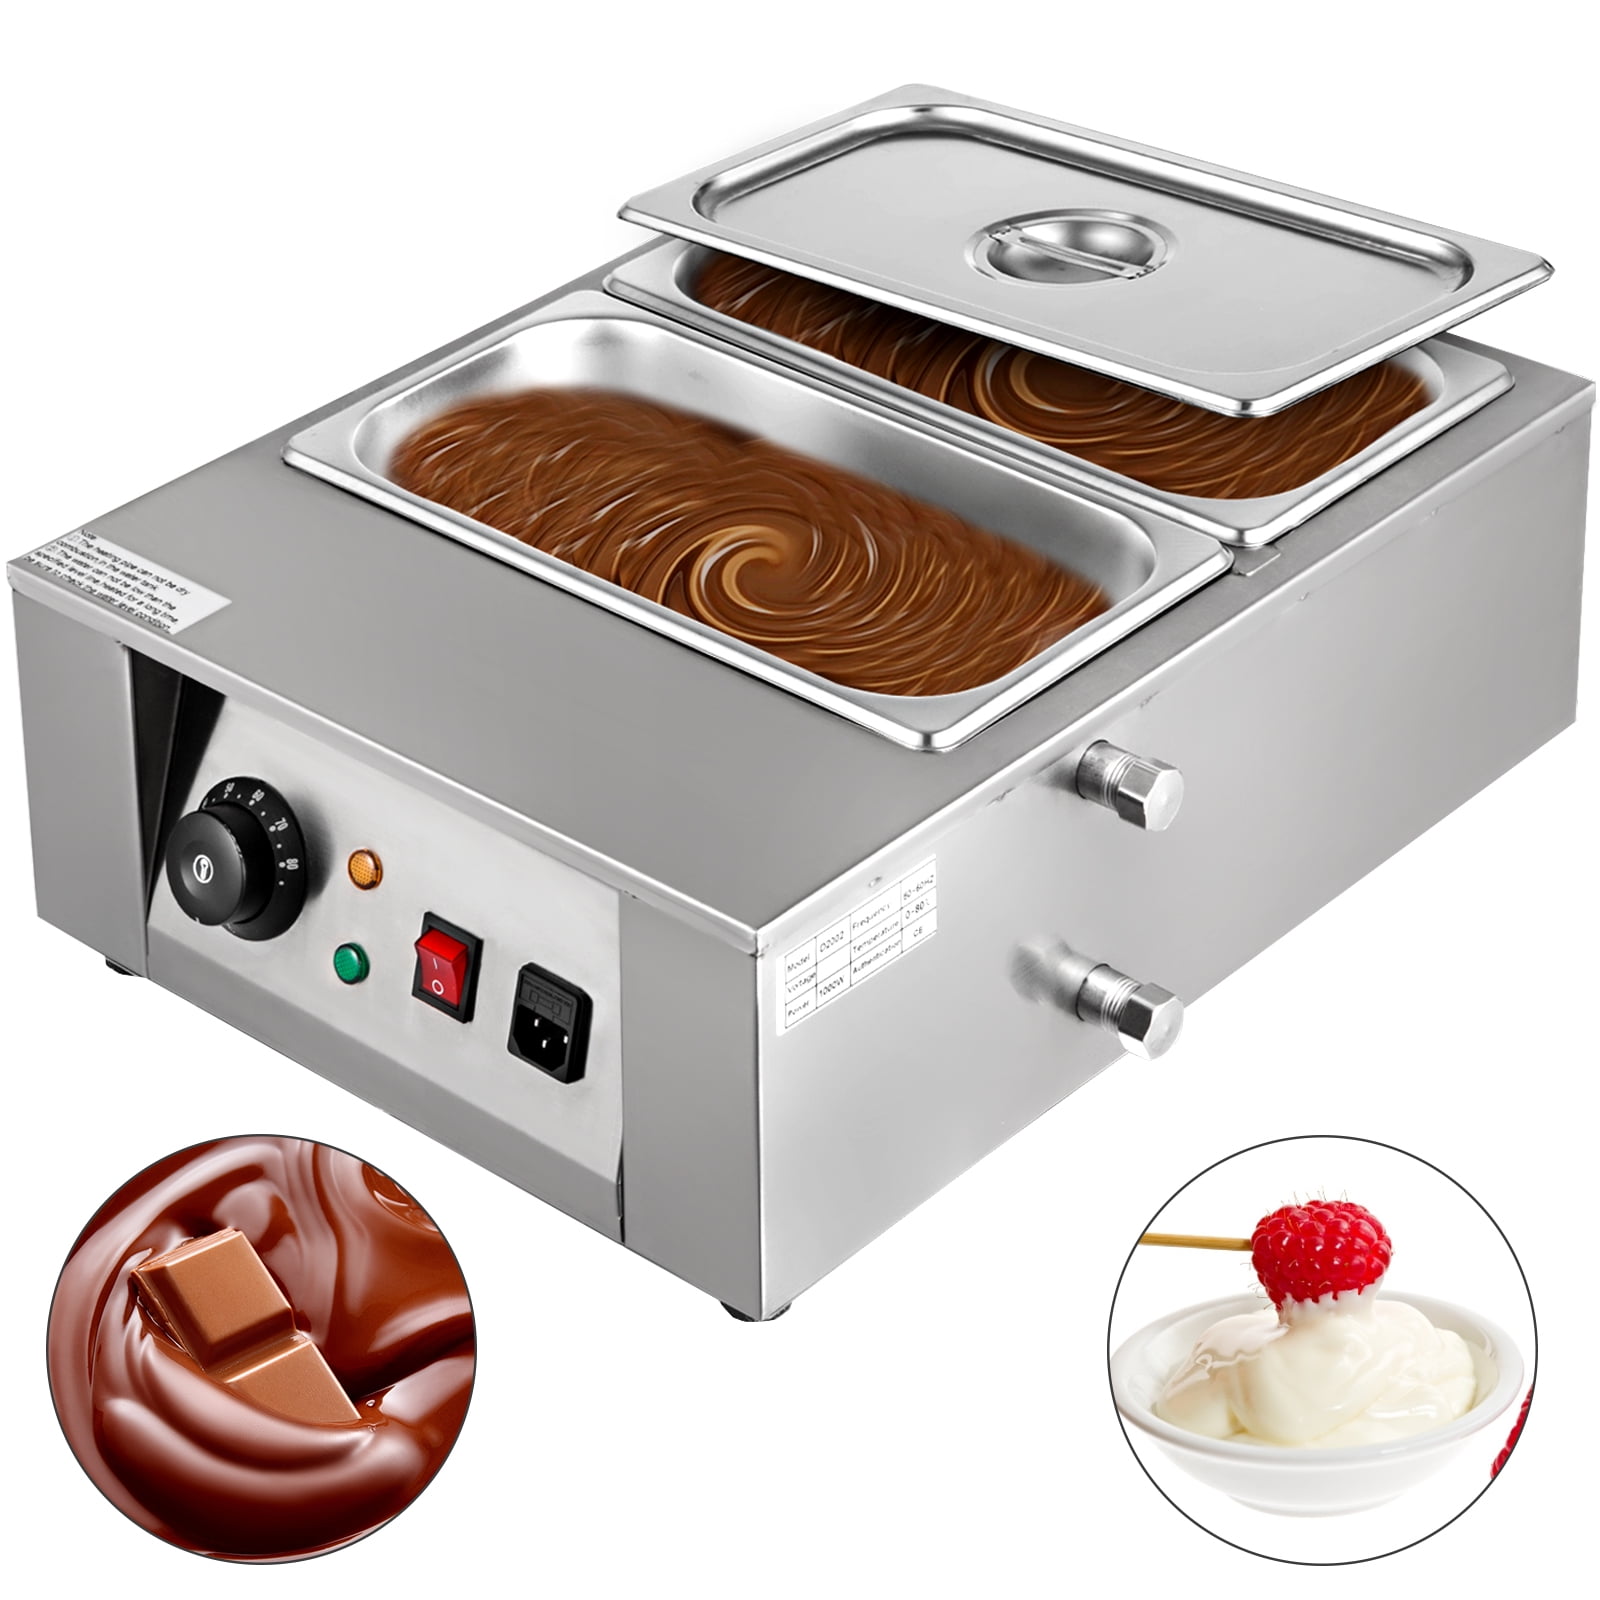  Commercial Hot Chocolate Maker Machine Temperature